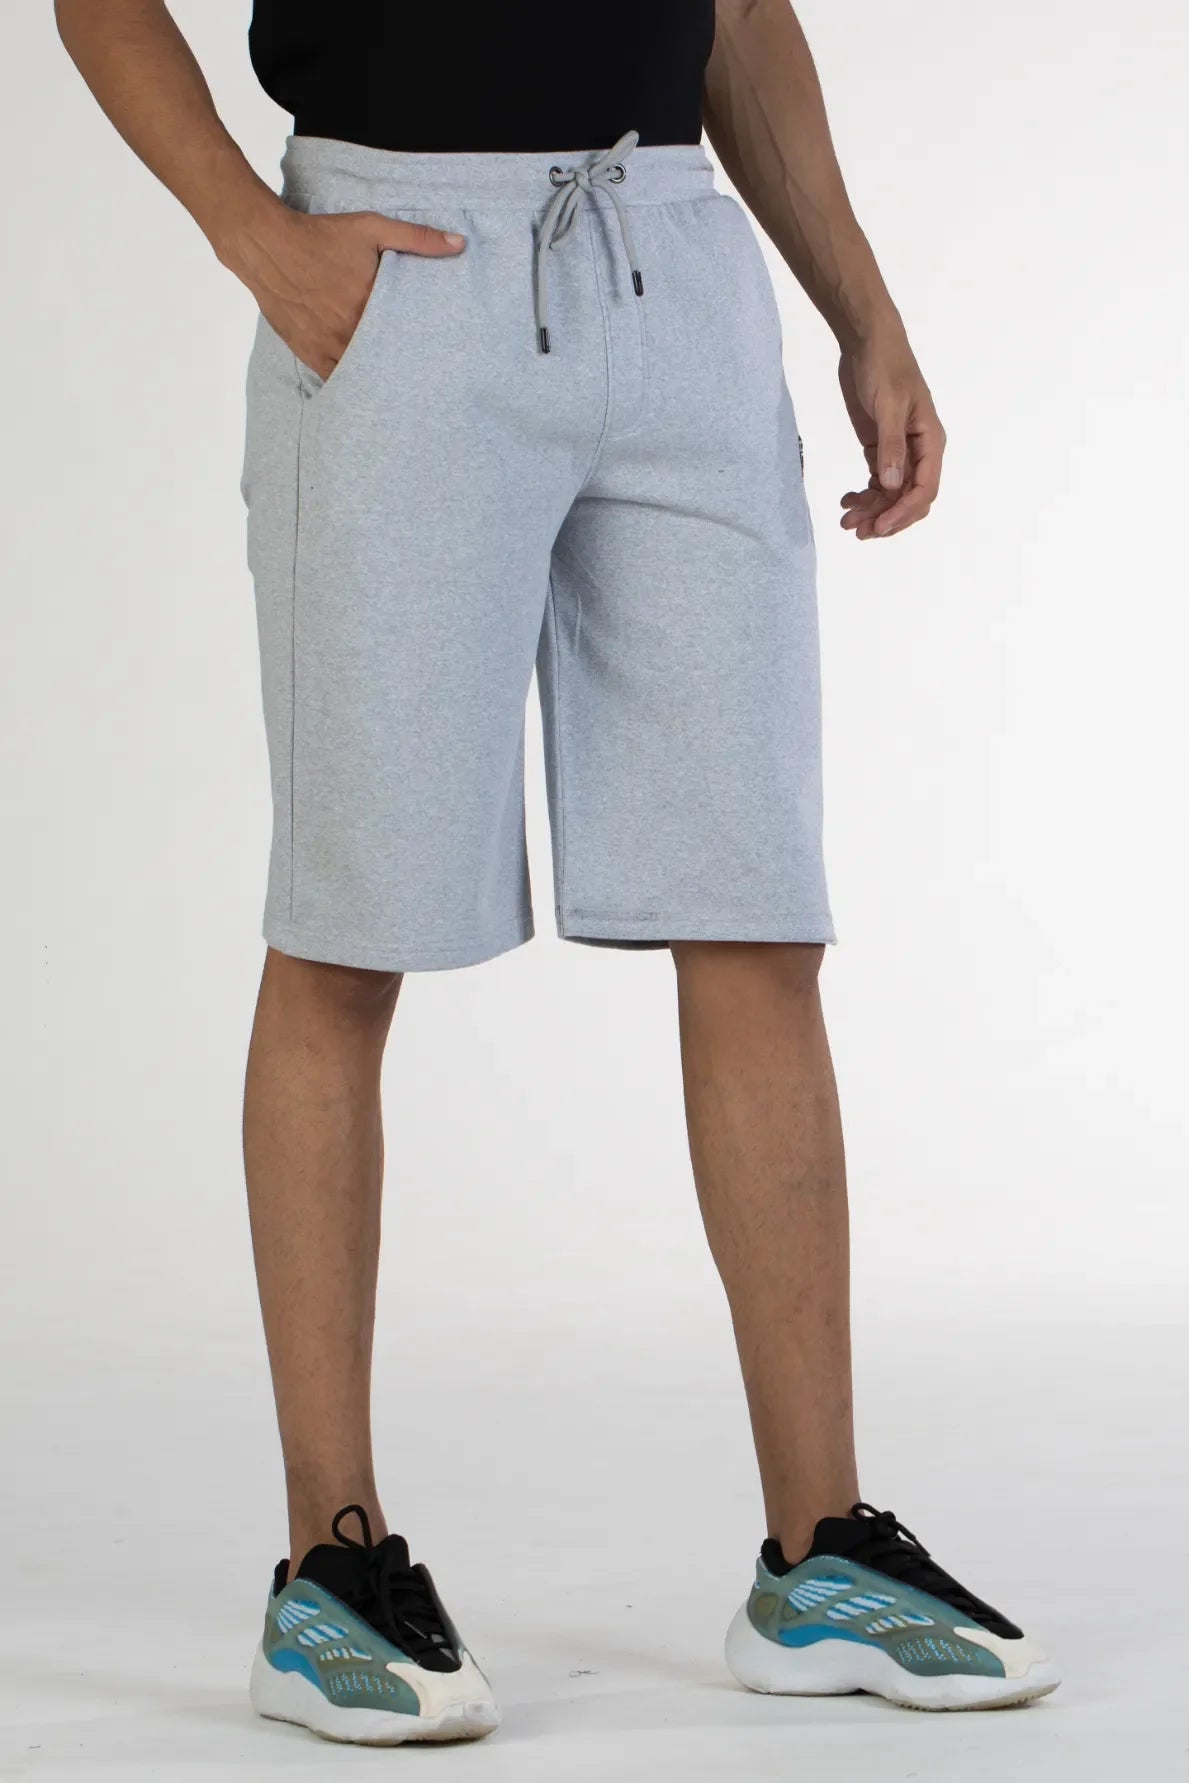 Grey Mellange solid knit cotton men's shorts